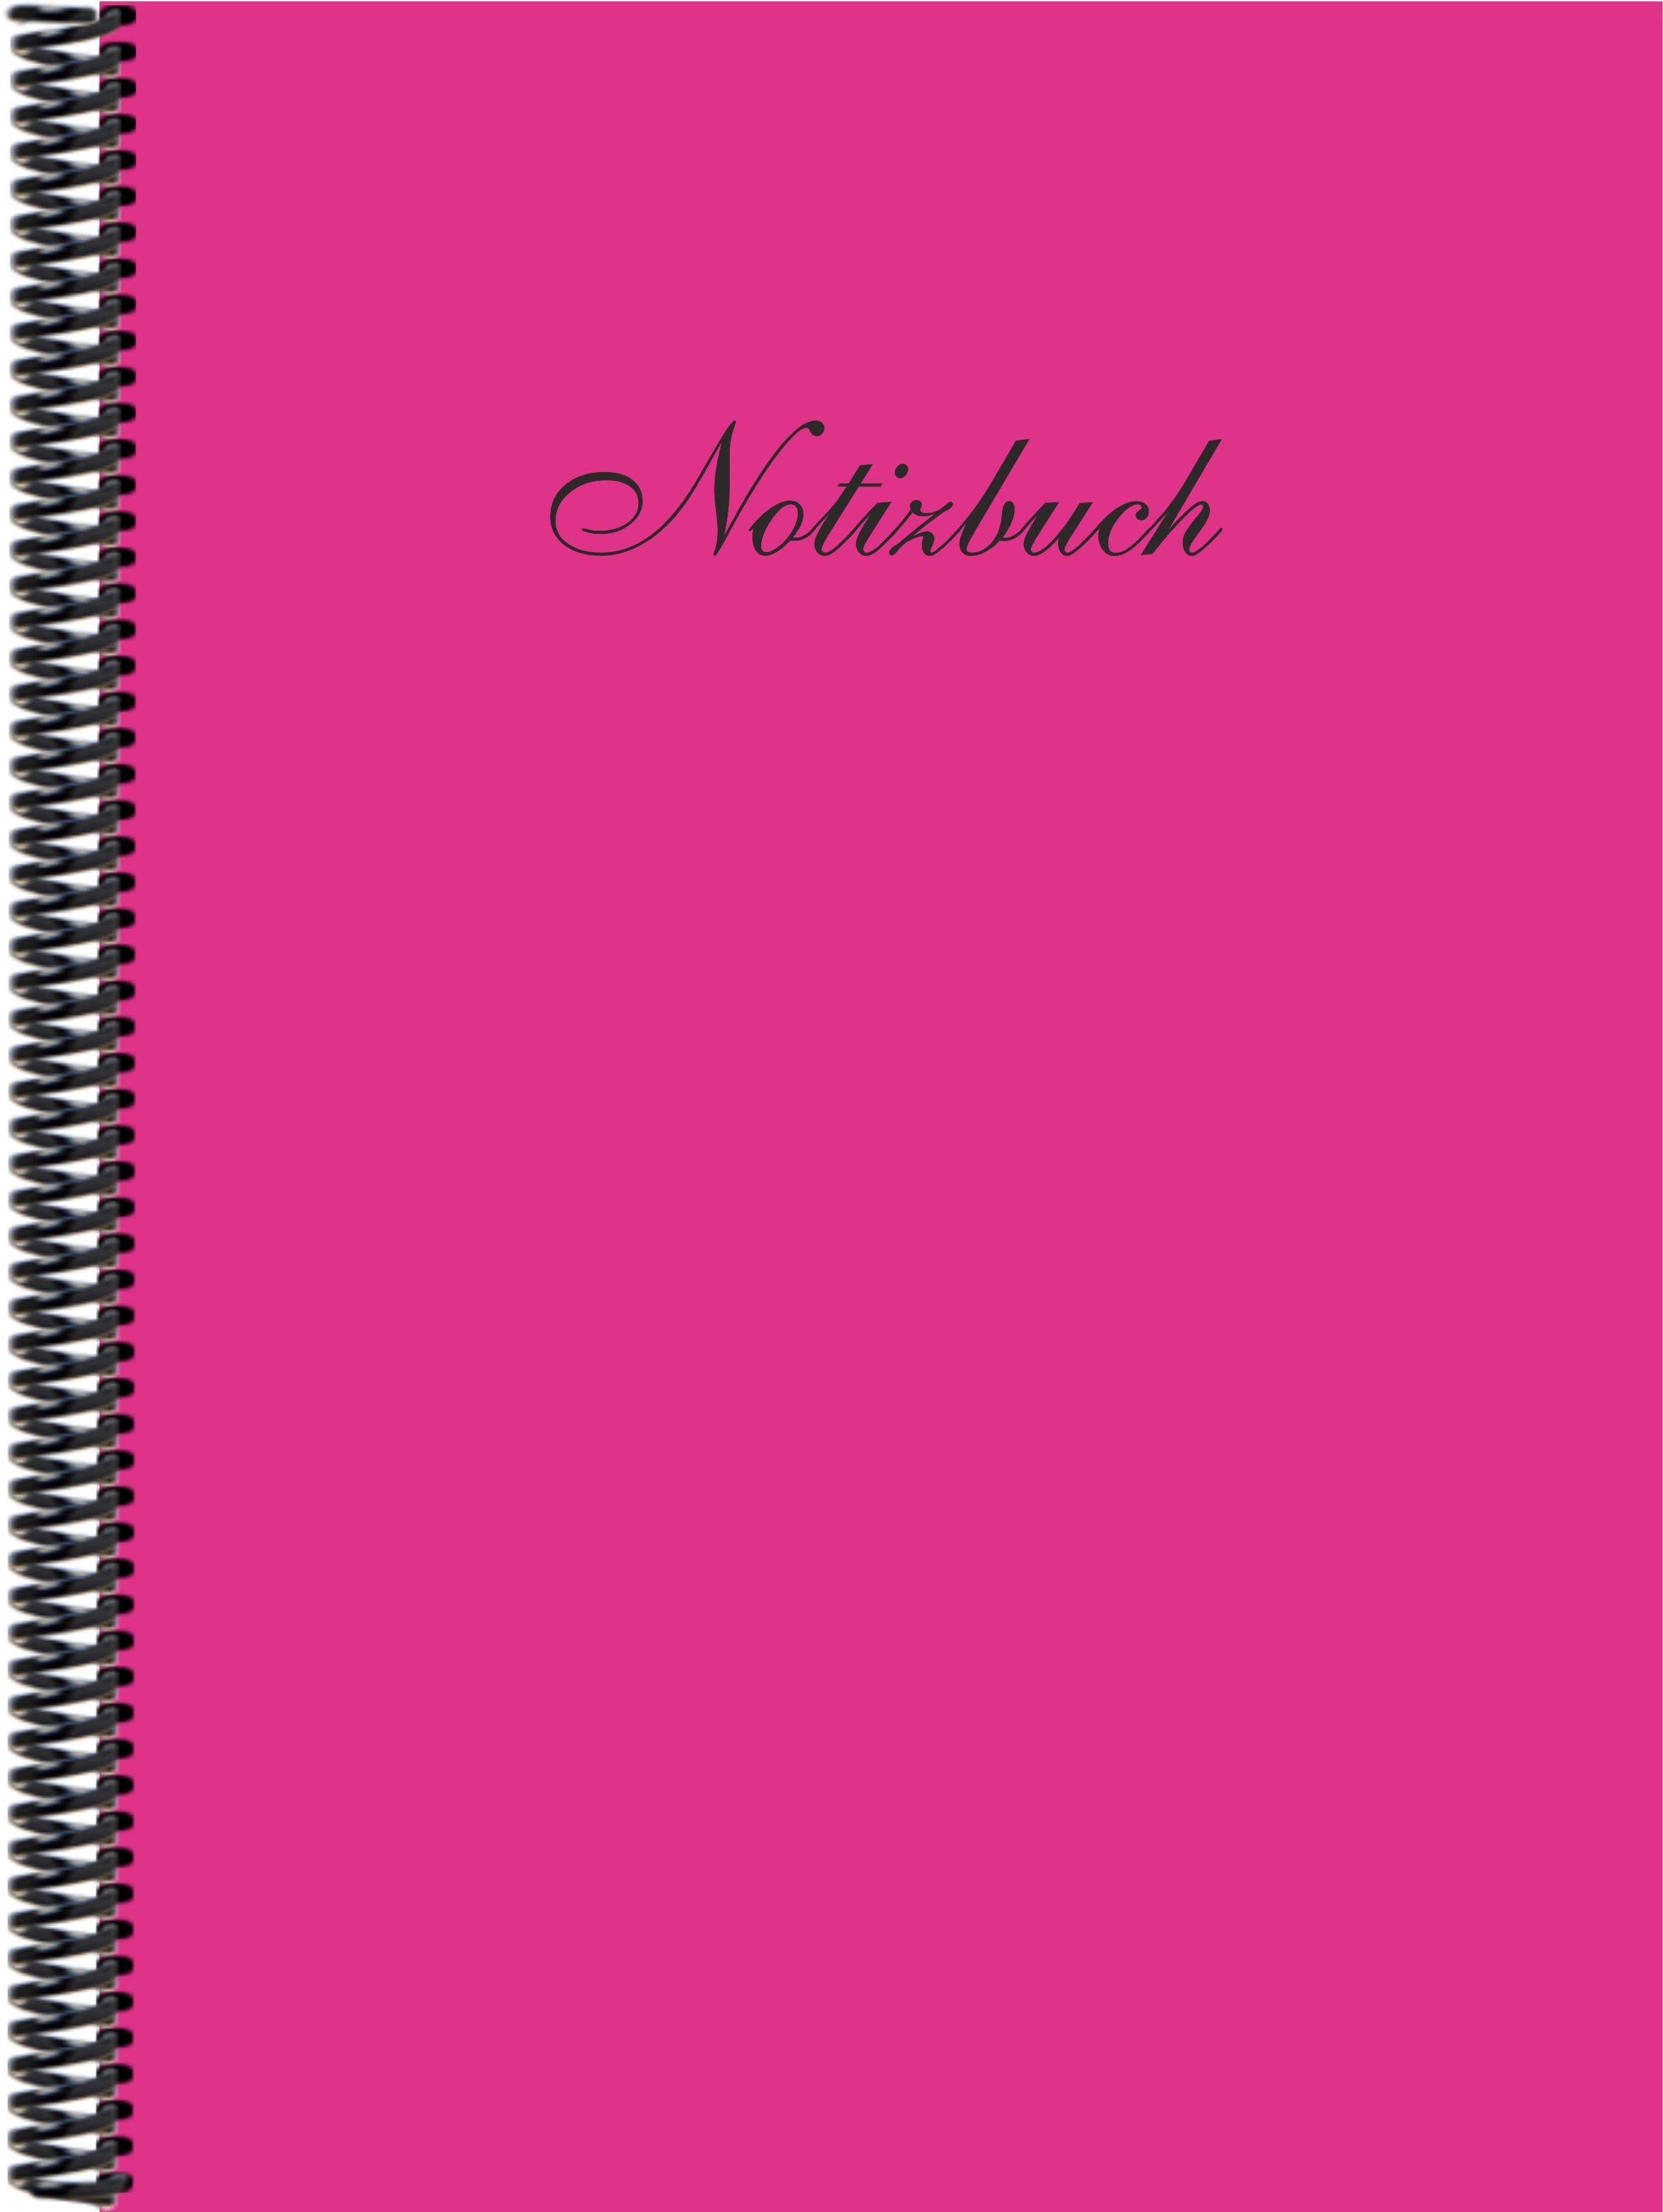 Gmbh in der Notizbuch Trendfarbe Notizbuch blanko, DINA4 E&Z pink Verlag